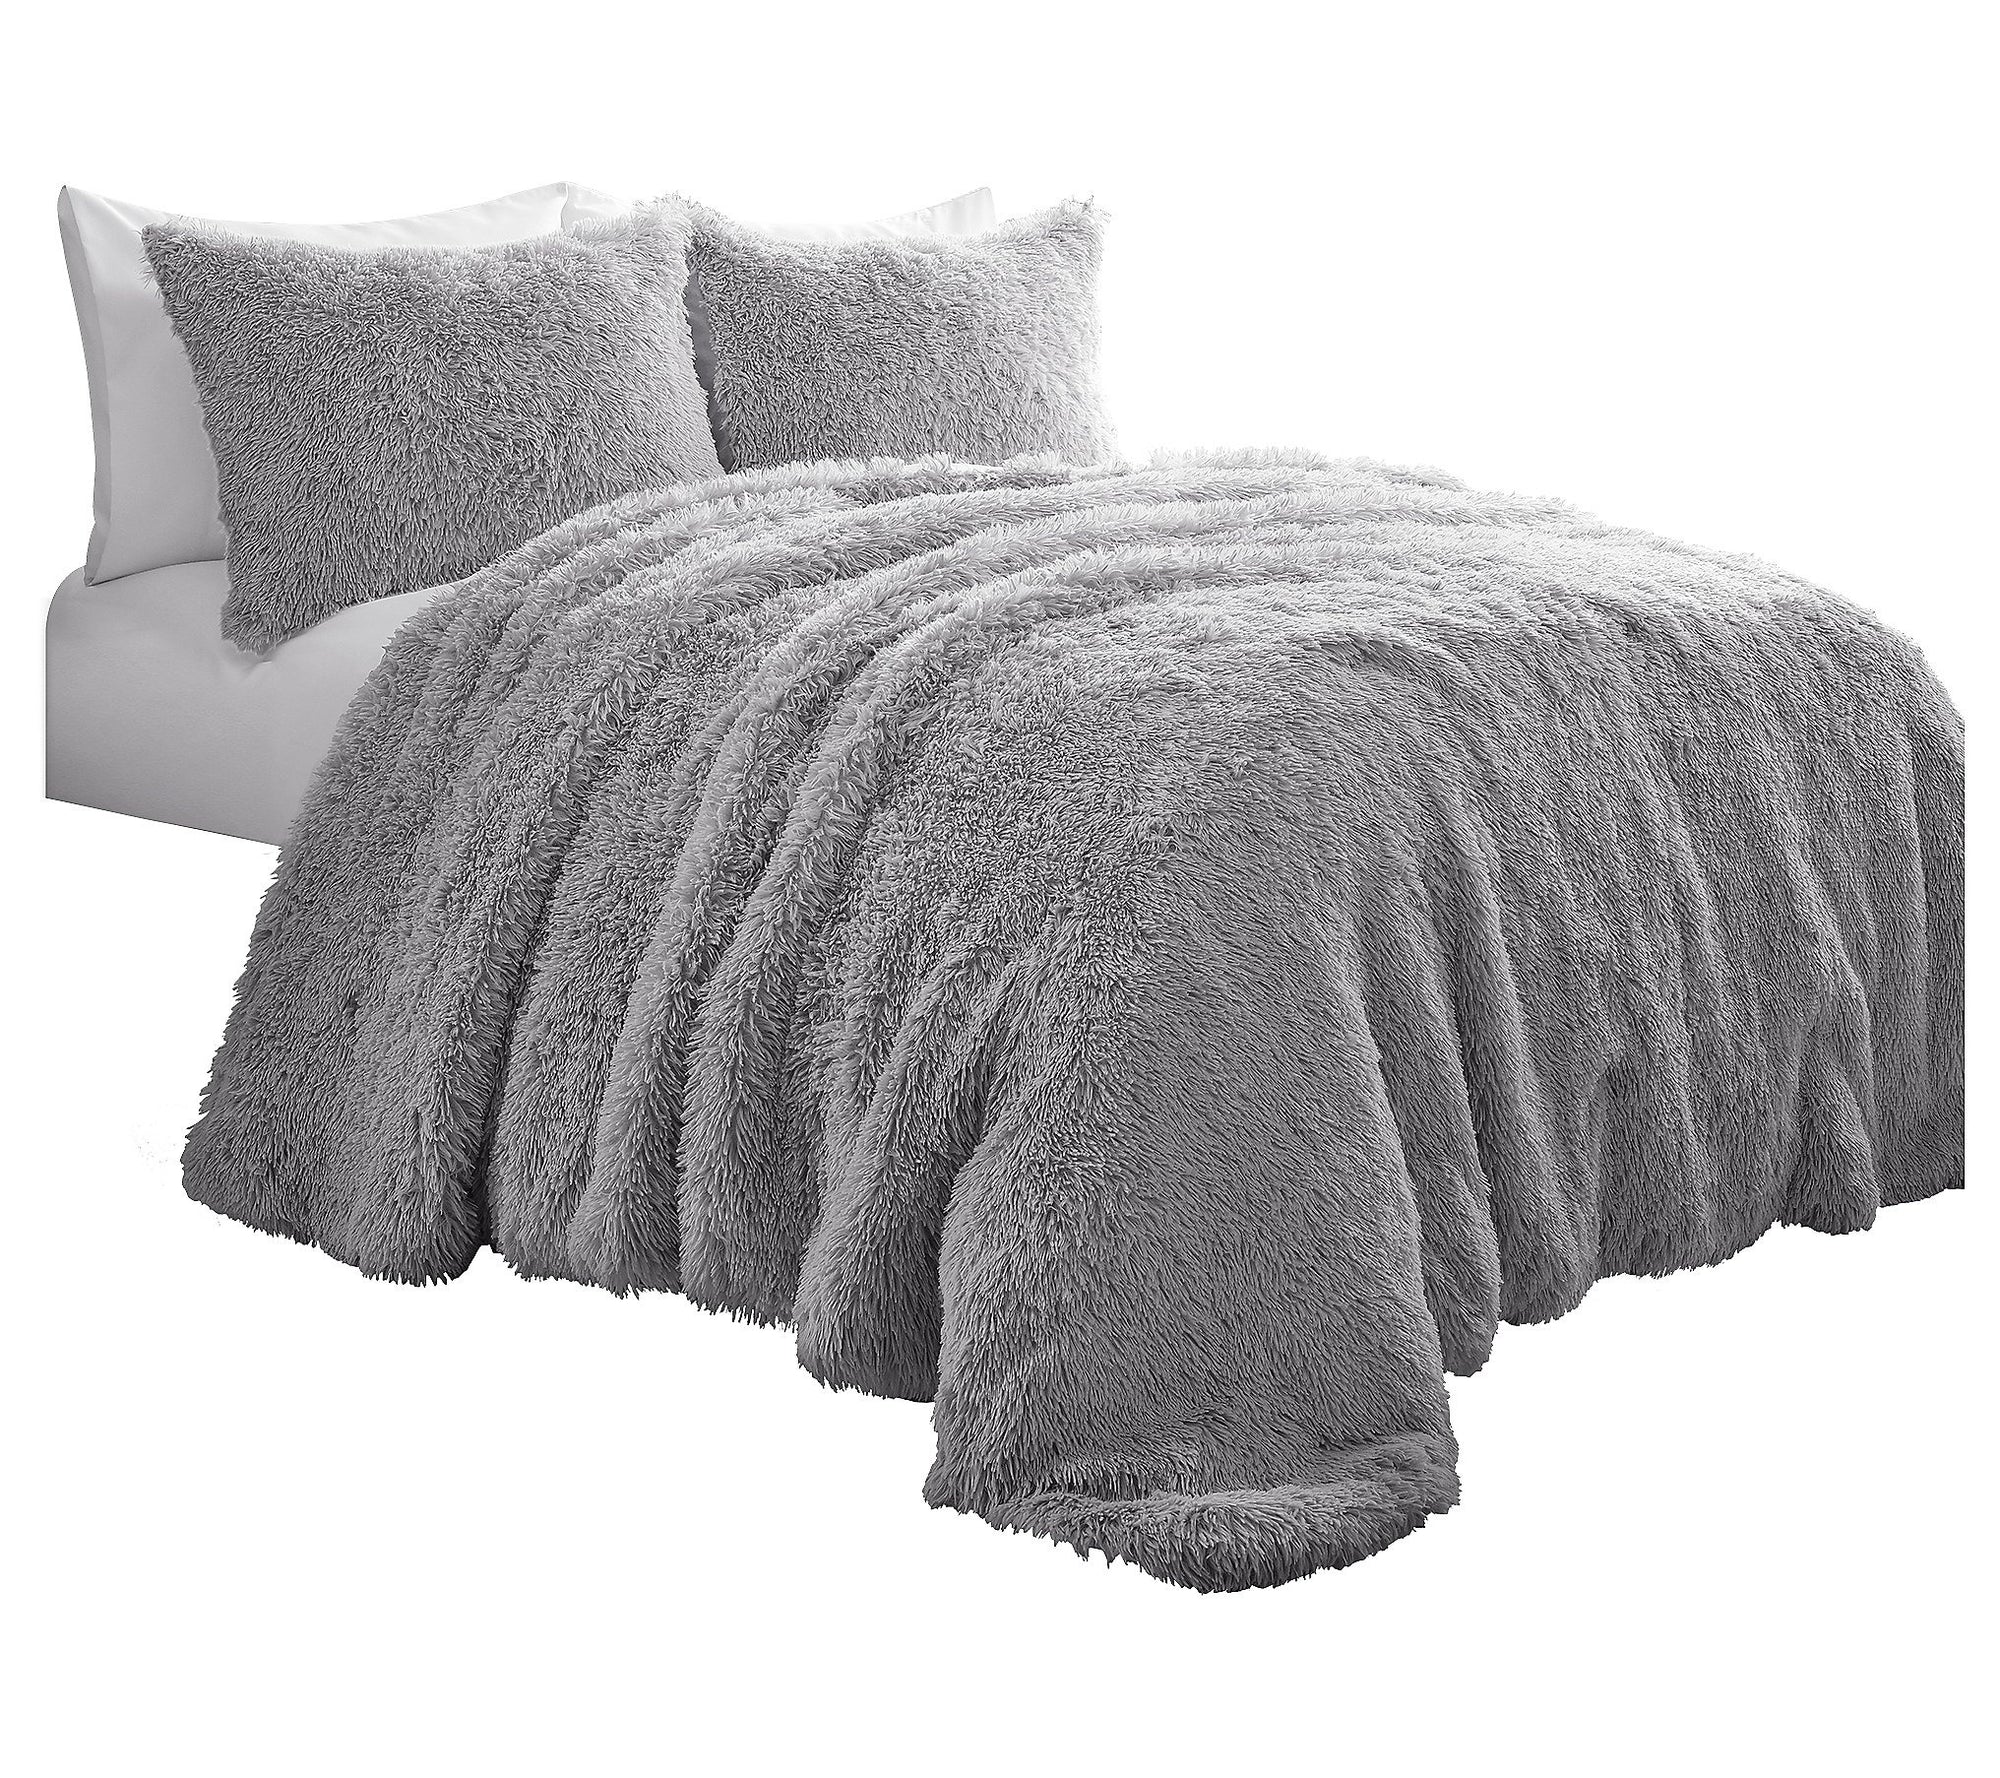 Fourrure Cozy Fluffy Blanket